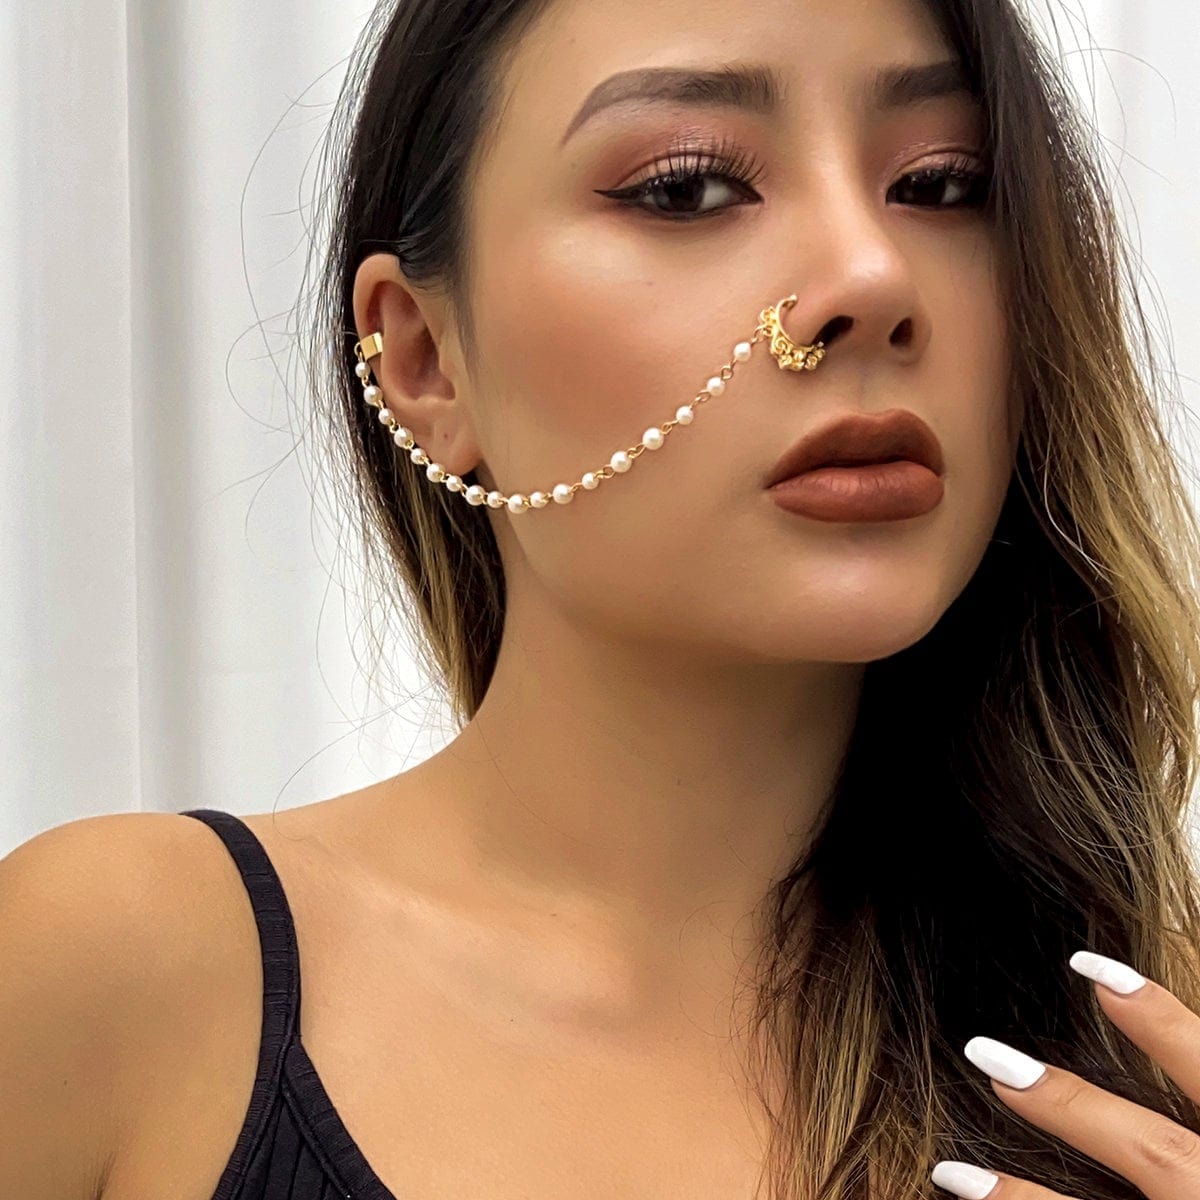 Yesbay No-piercing Ear Lip Hoop Ring Women Chic Fake Nose Clip Jewelry-Silver  - Walmart.com